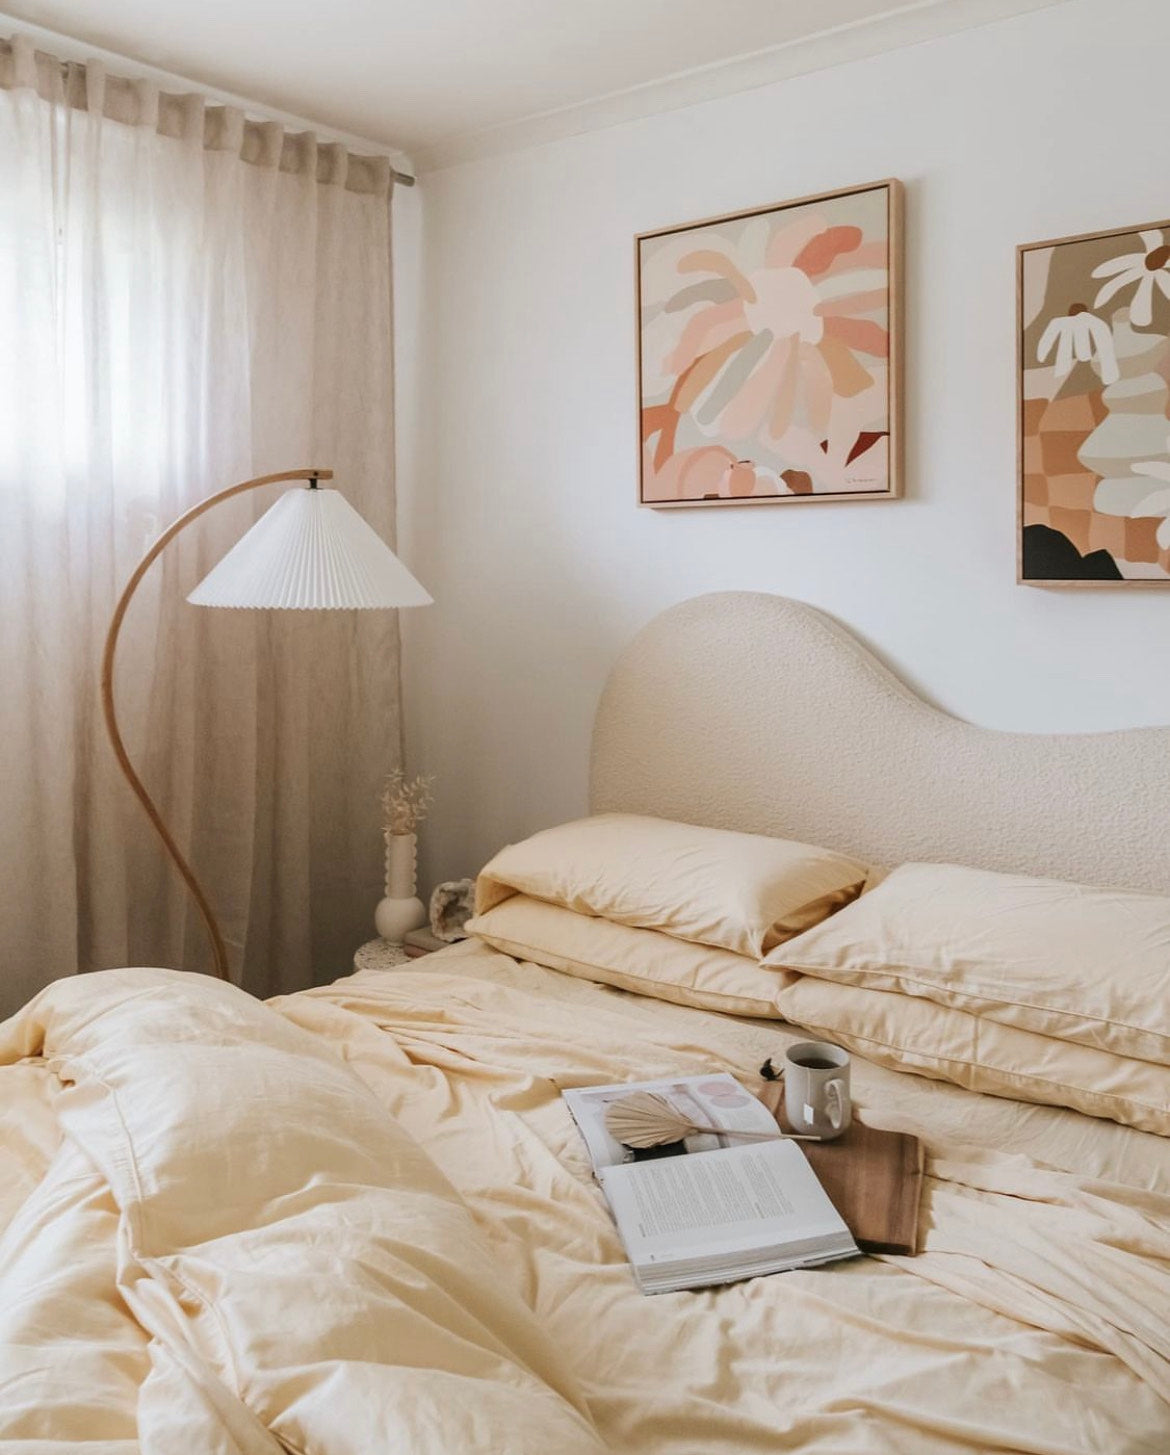 Mads Caprani Lamp in cosy bedroom